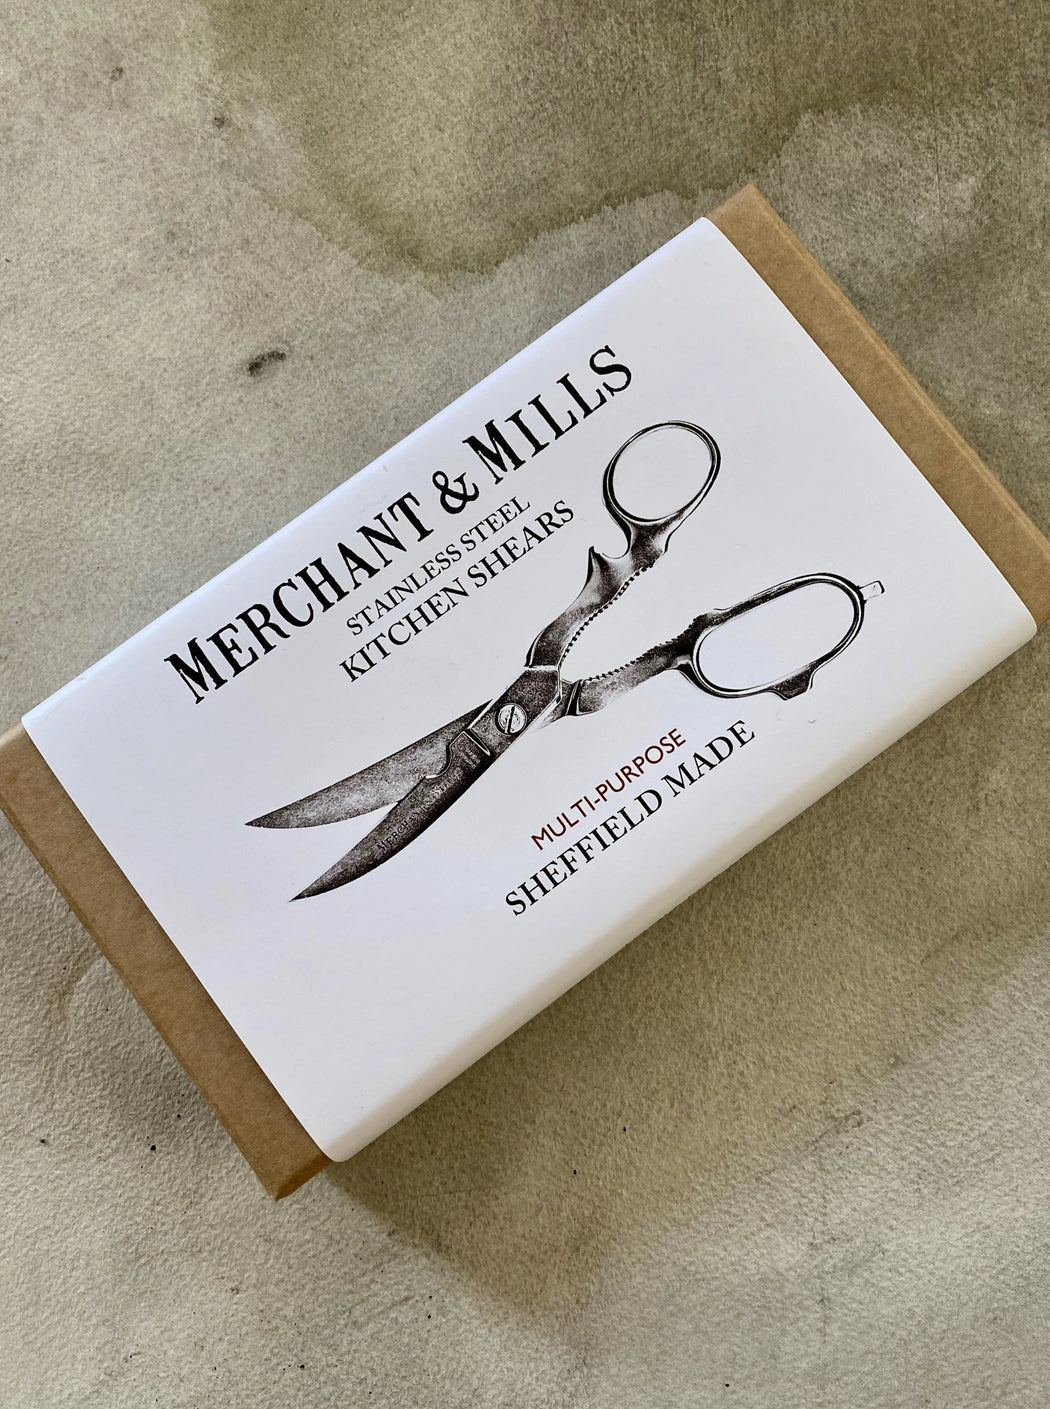 The Best Kitchen Scissors — Pittsburgh Mercantile